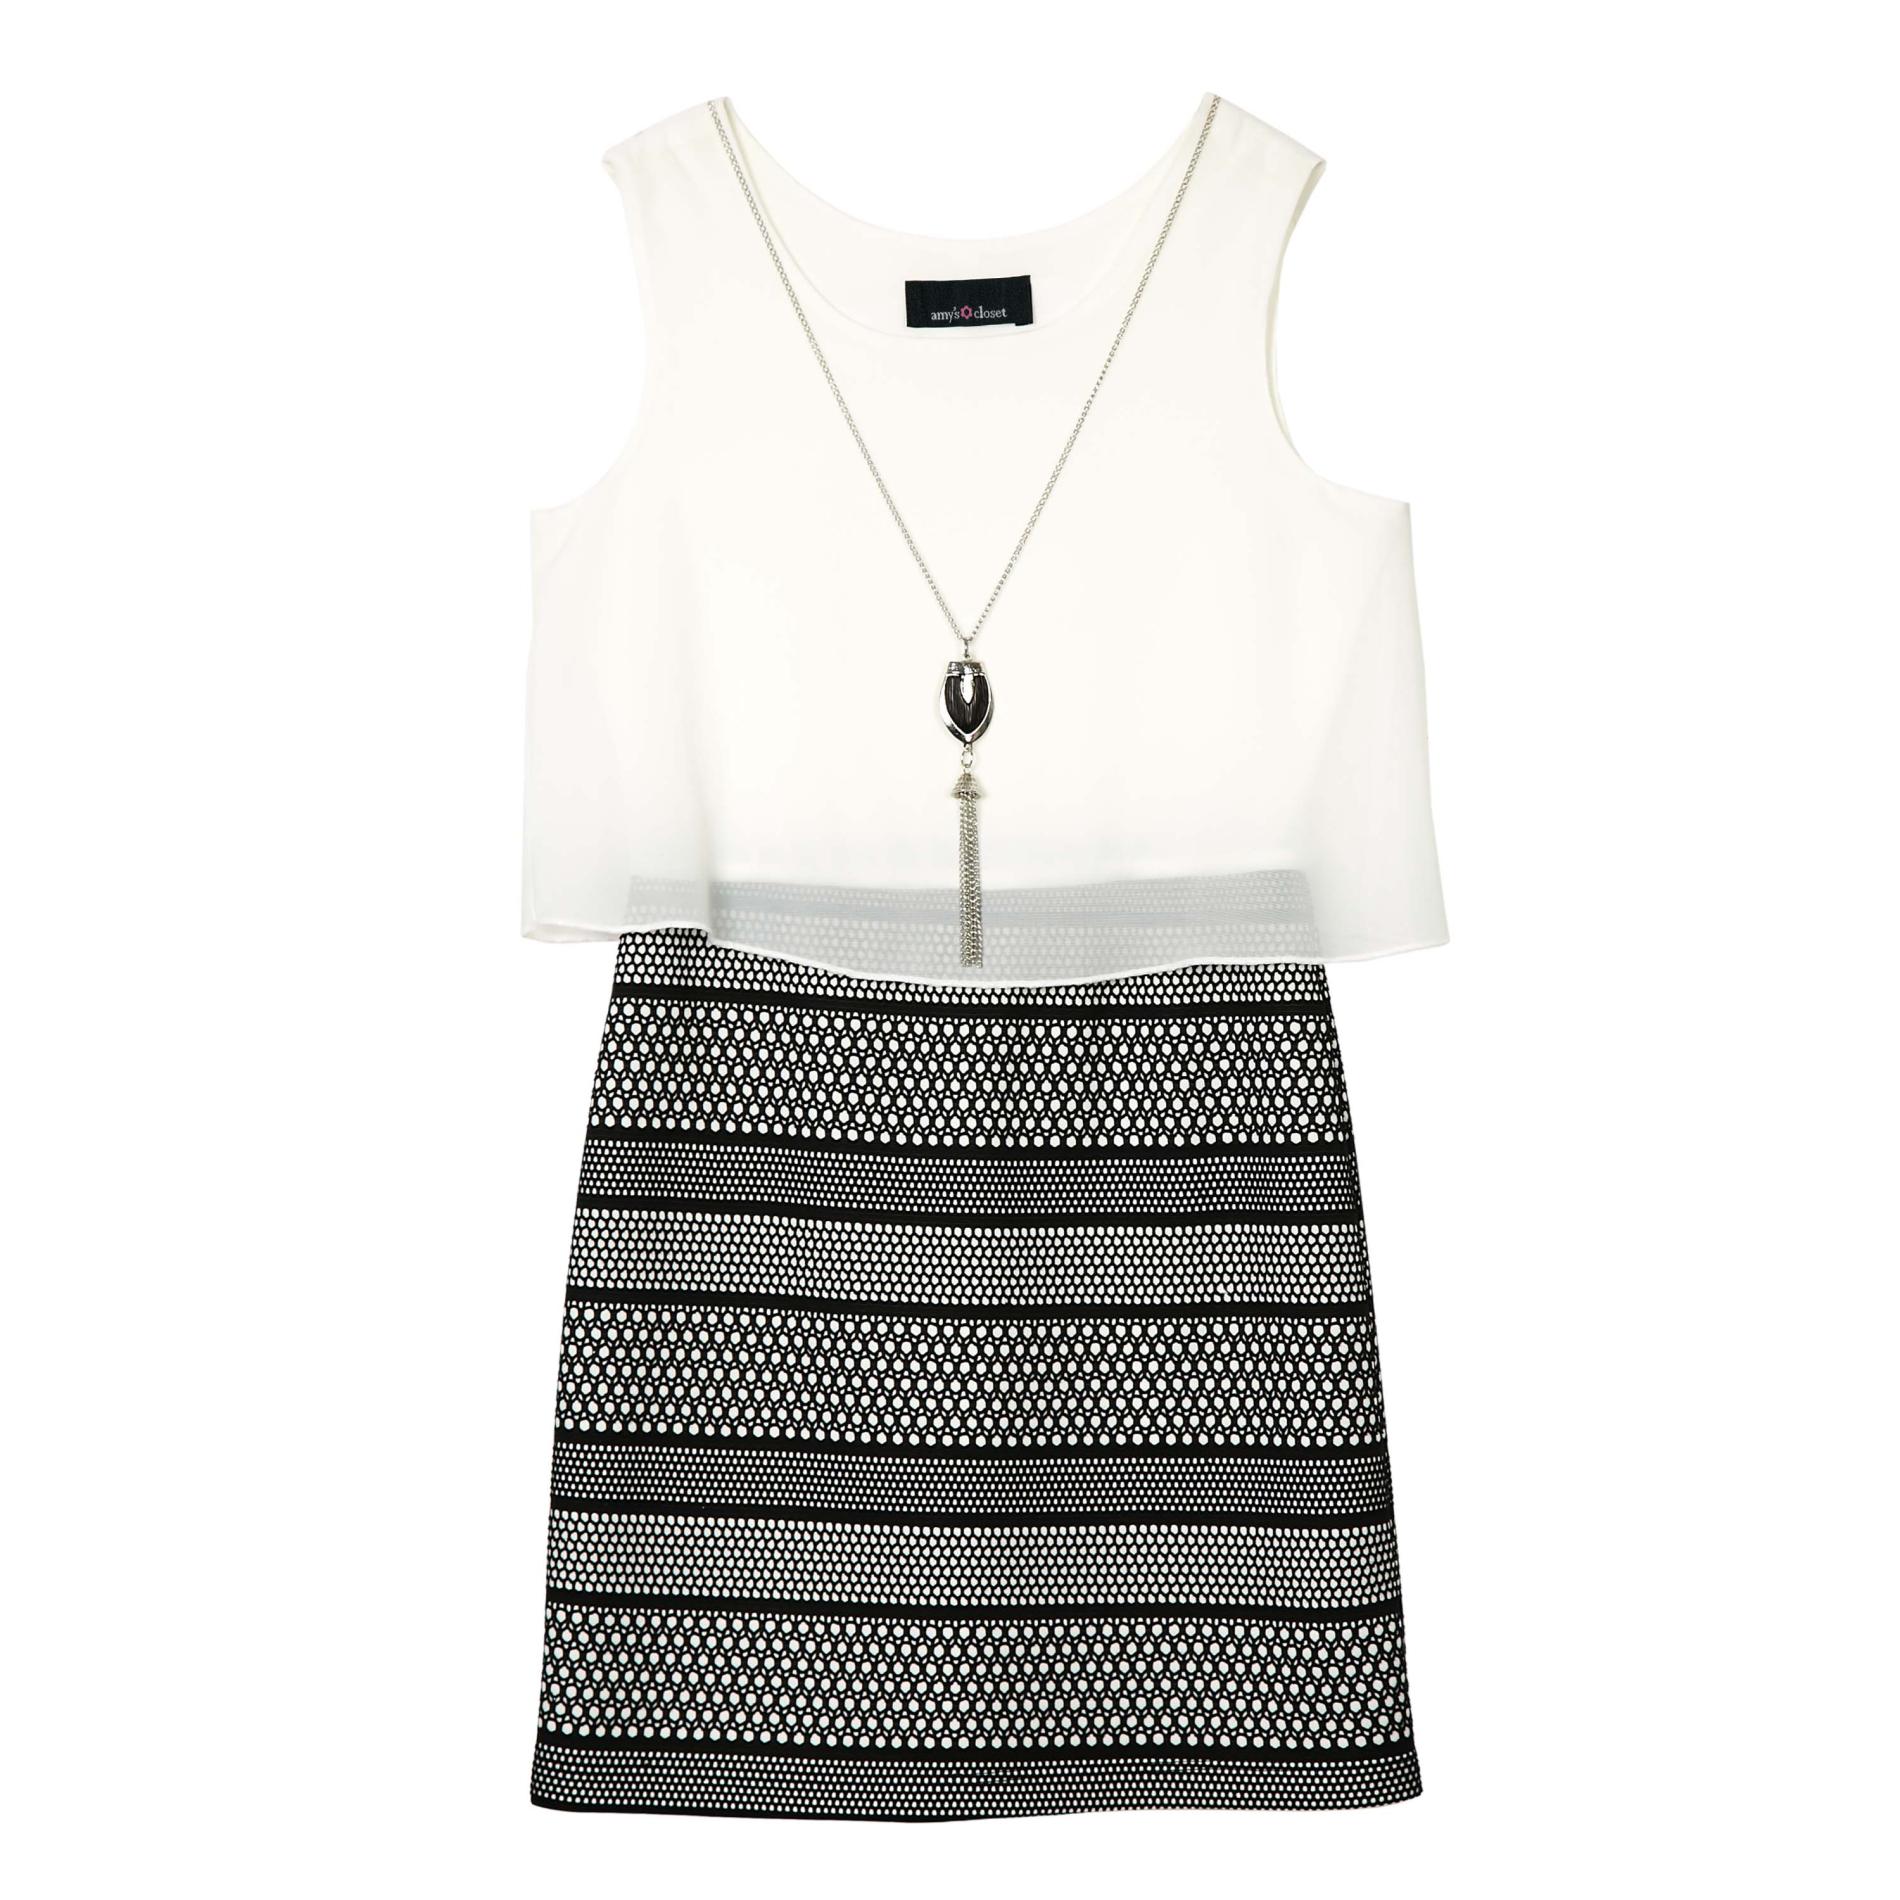 Amy's Closet Girl's Blouson Dress & Pendant Necklace - Striped